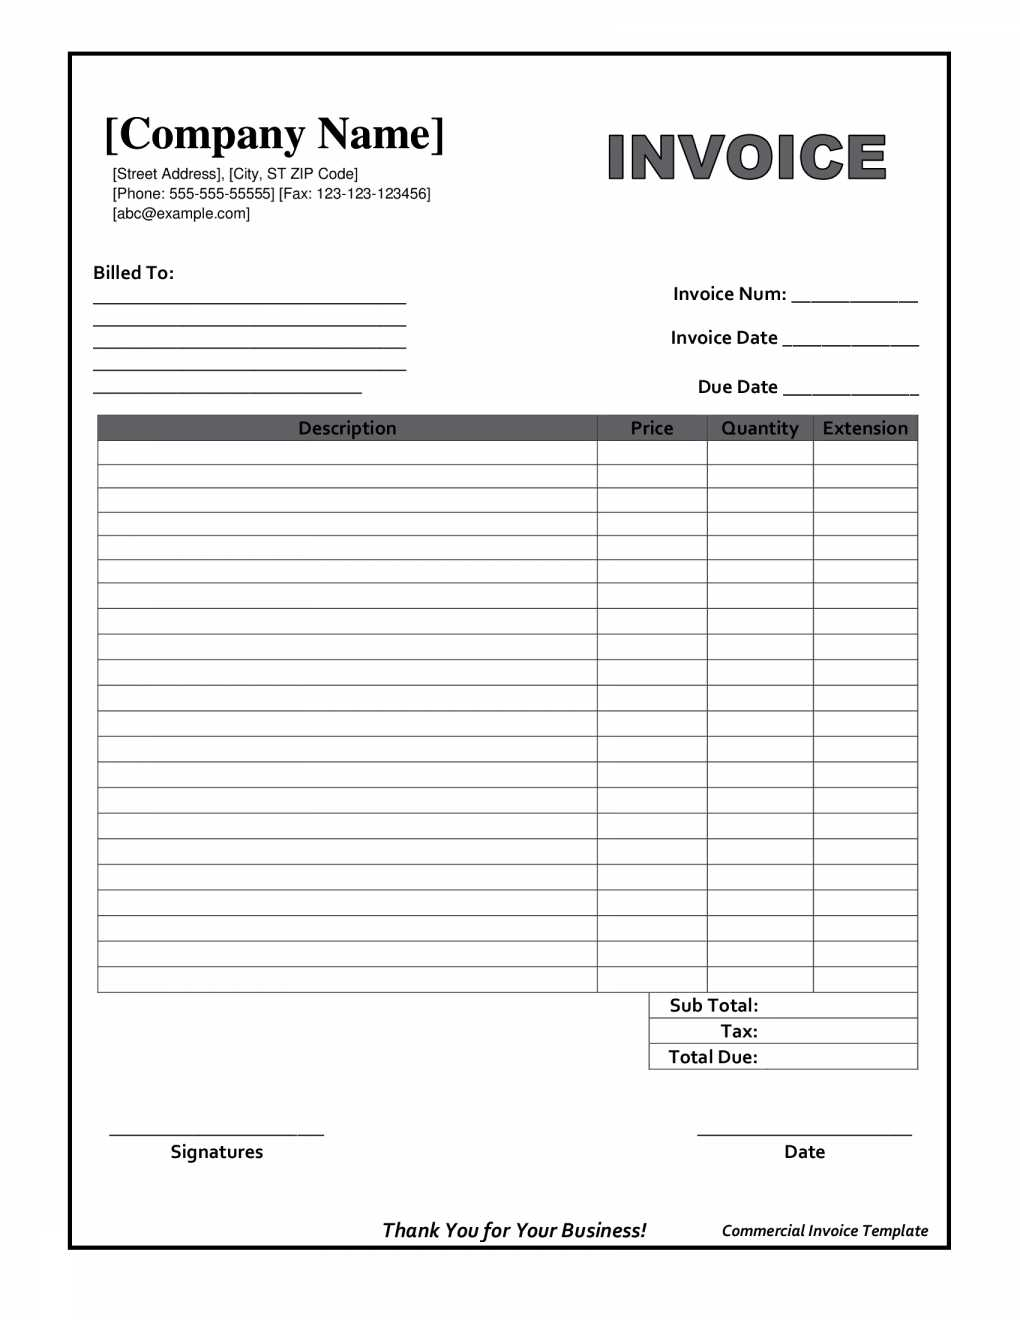 quickbooks invoice templates free